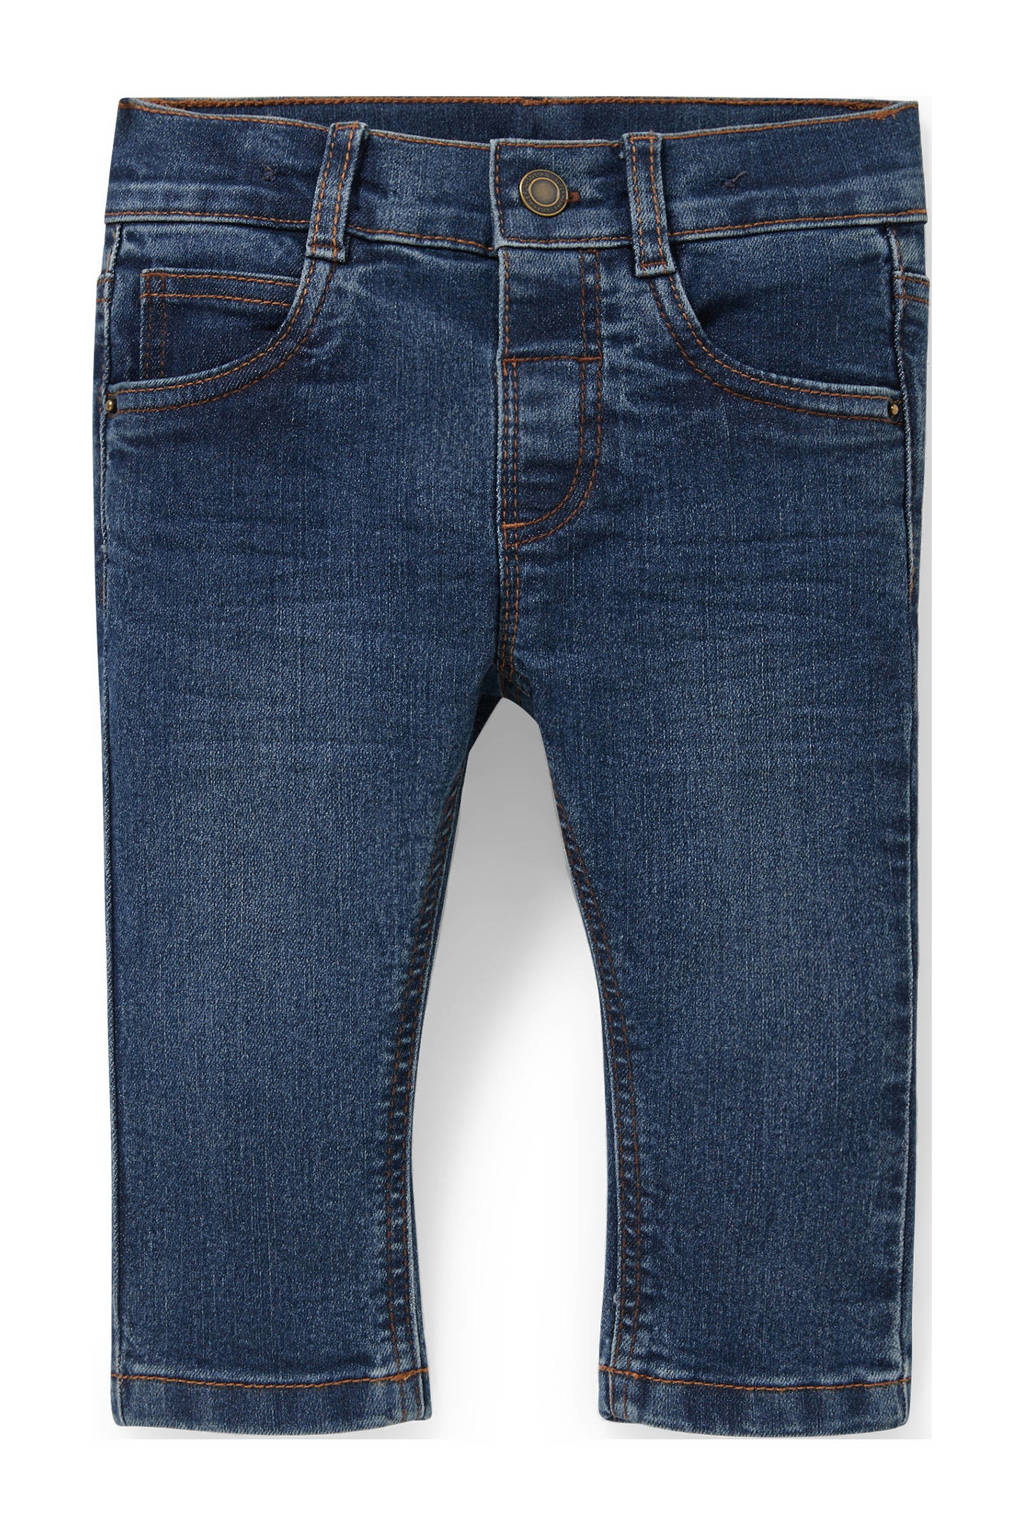 C&A Baby Club regular fit jeans blue denim